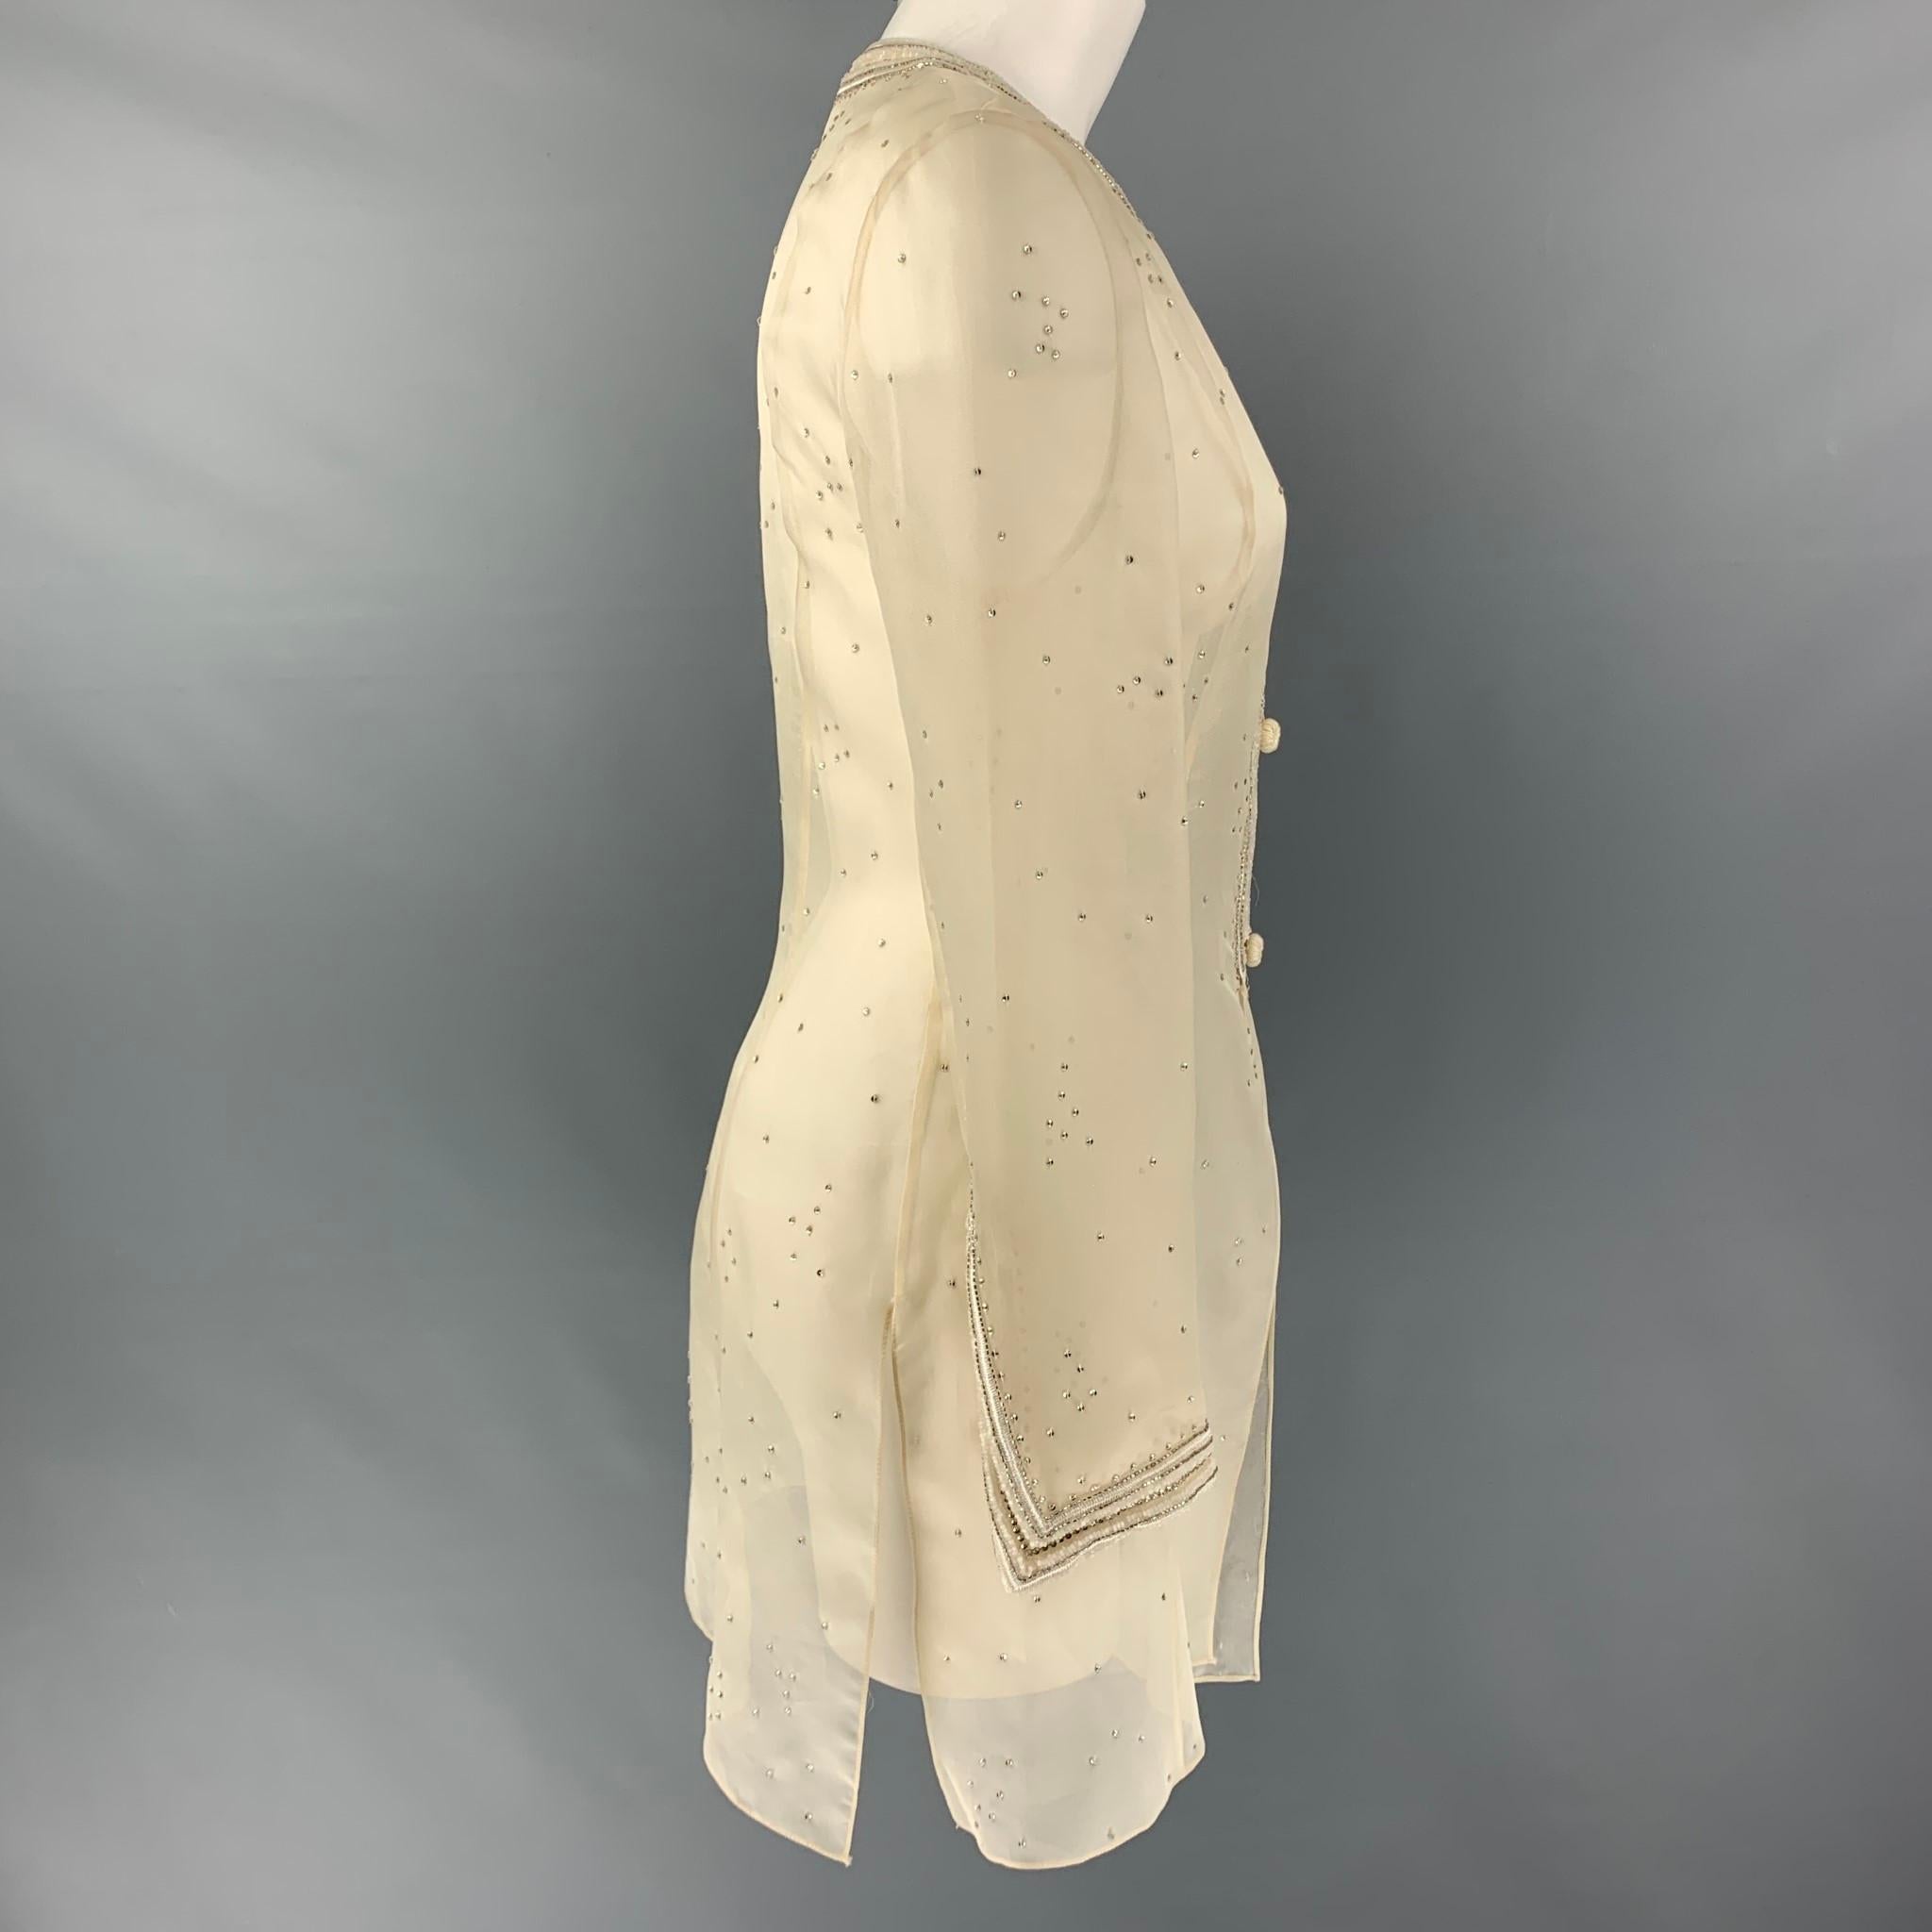 Women's OSCAR DE LA RENTA Size M Cream Embroidered Tunic Dress Top